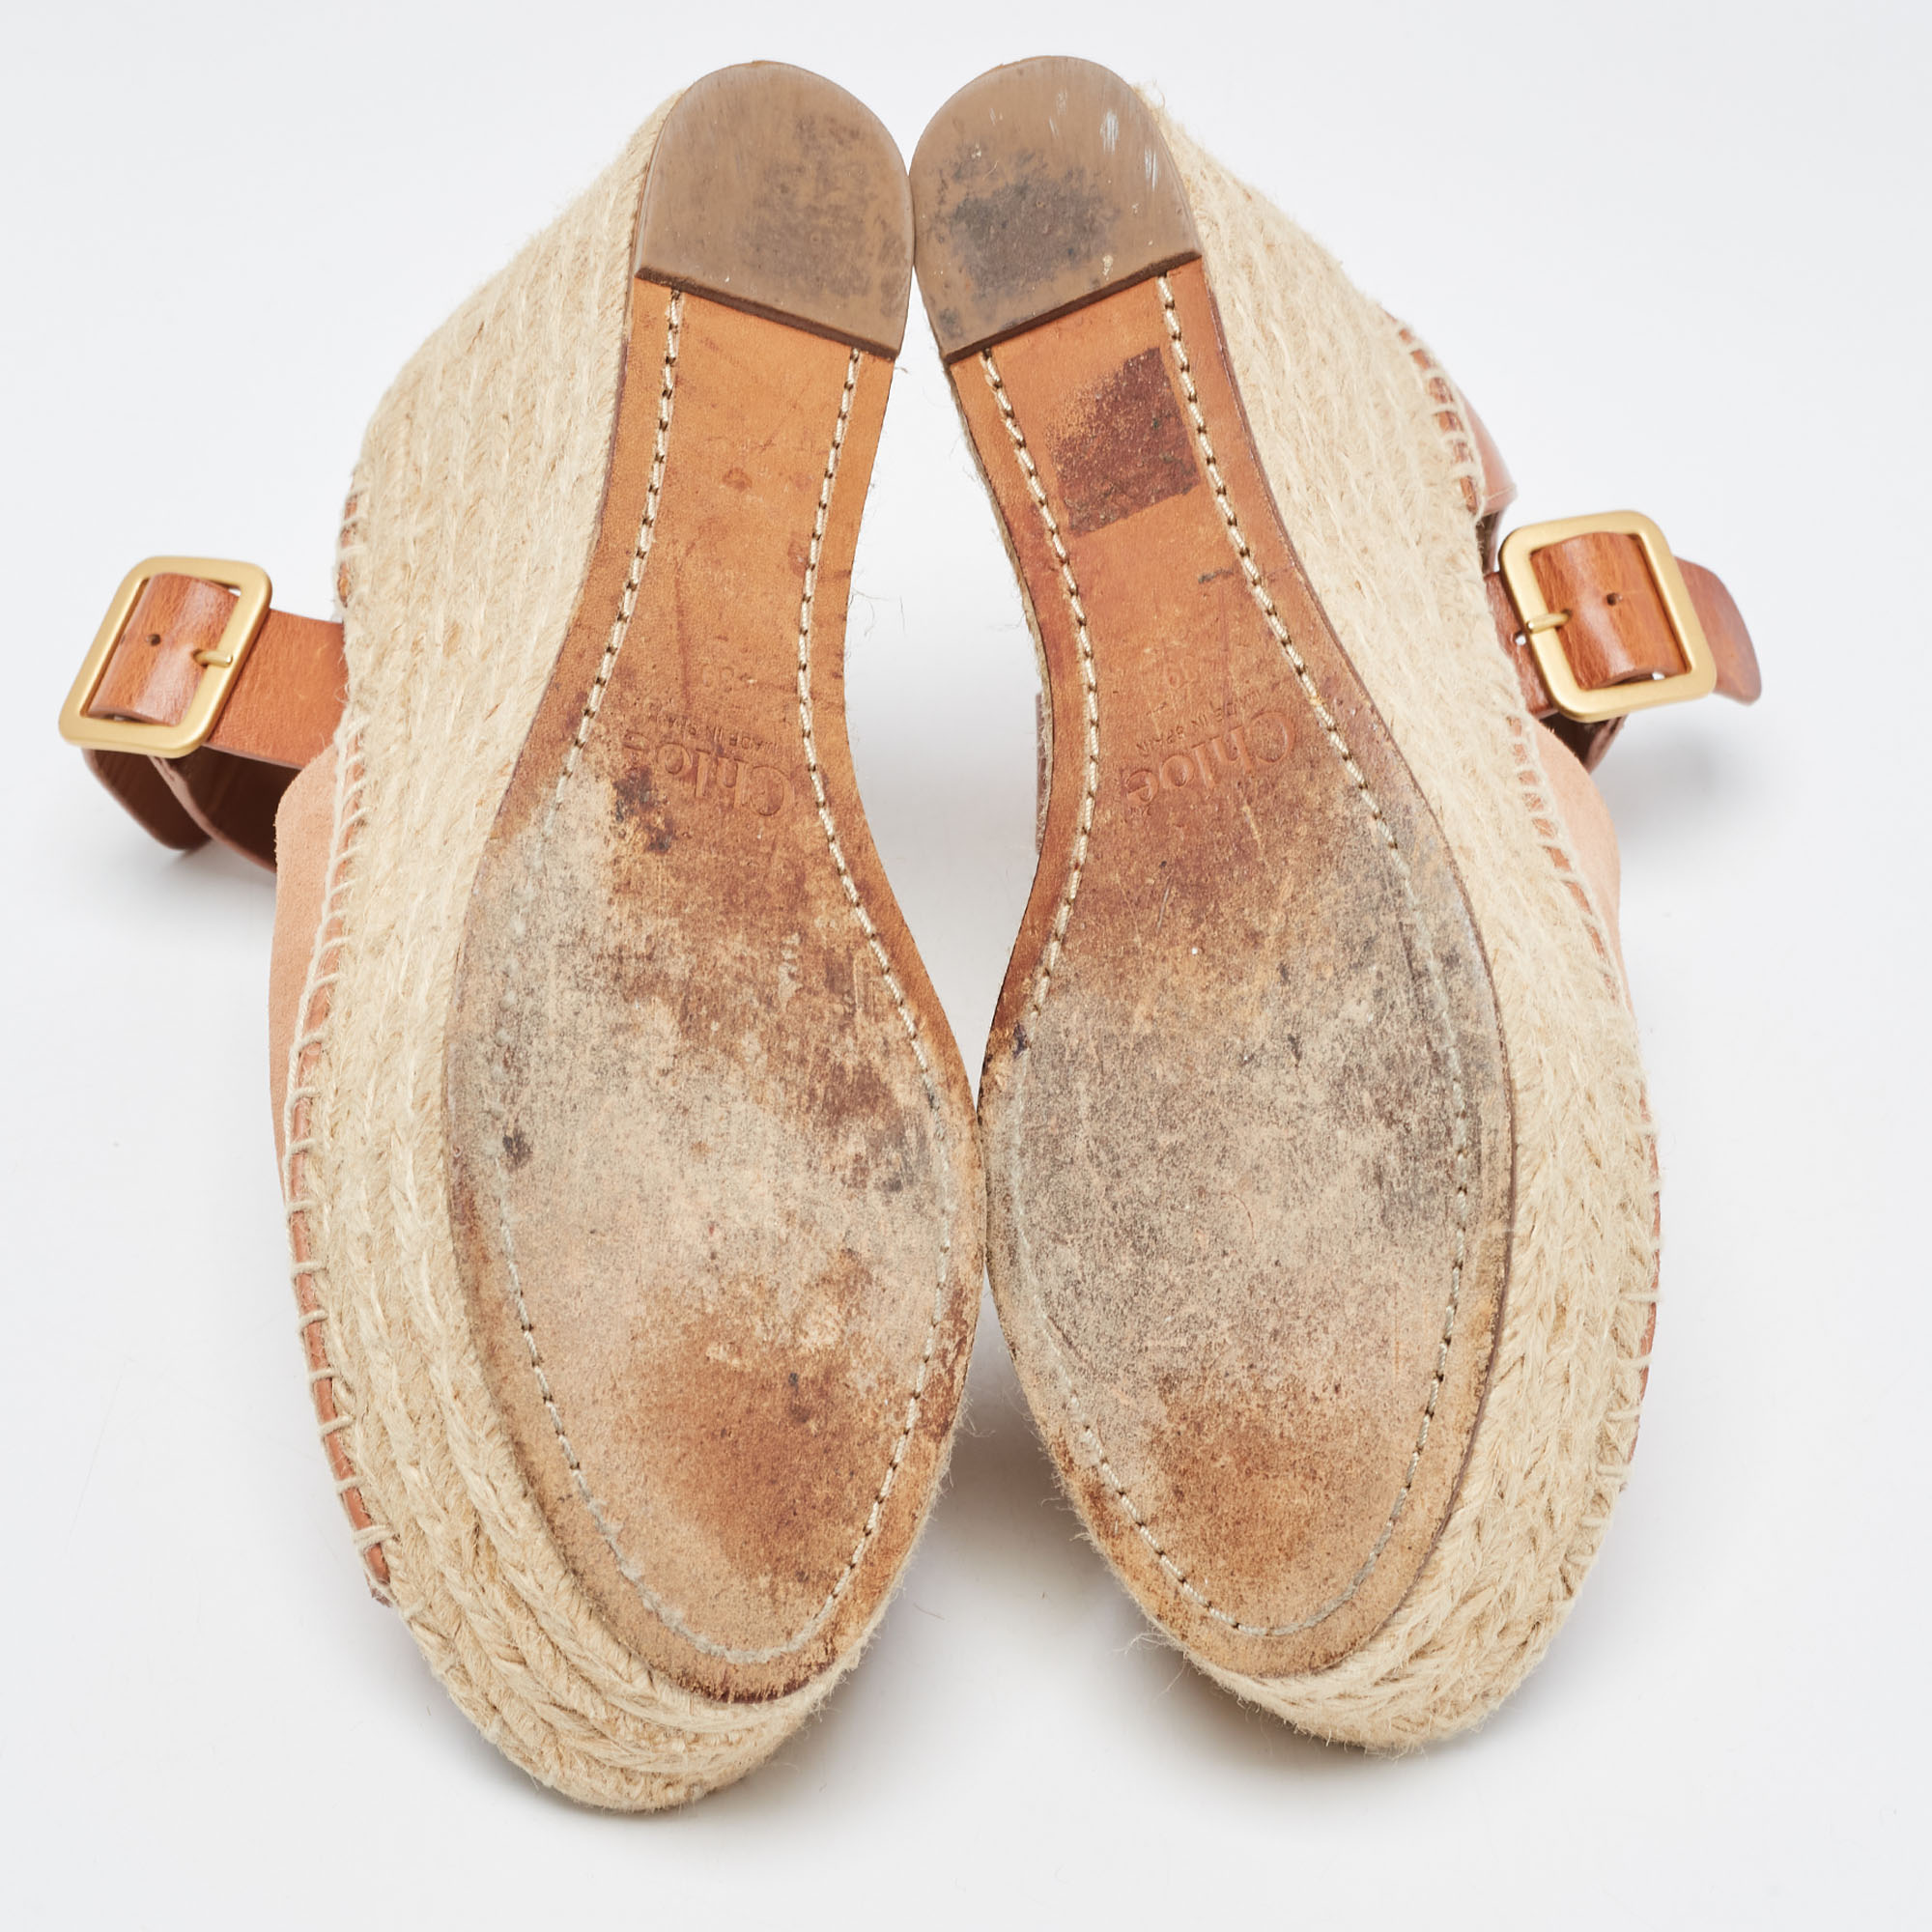 Chloe Tan Leather Wedge Platform Ankle Strap Sandals Size 39